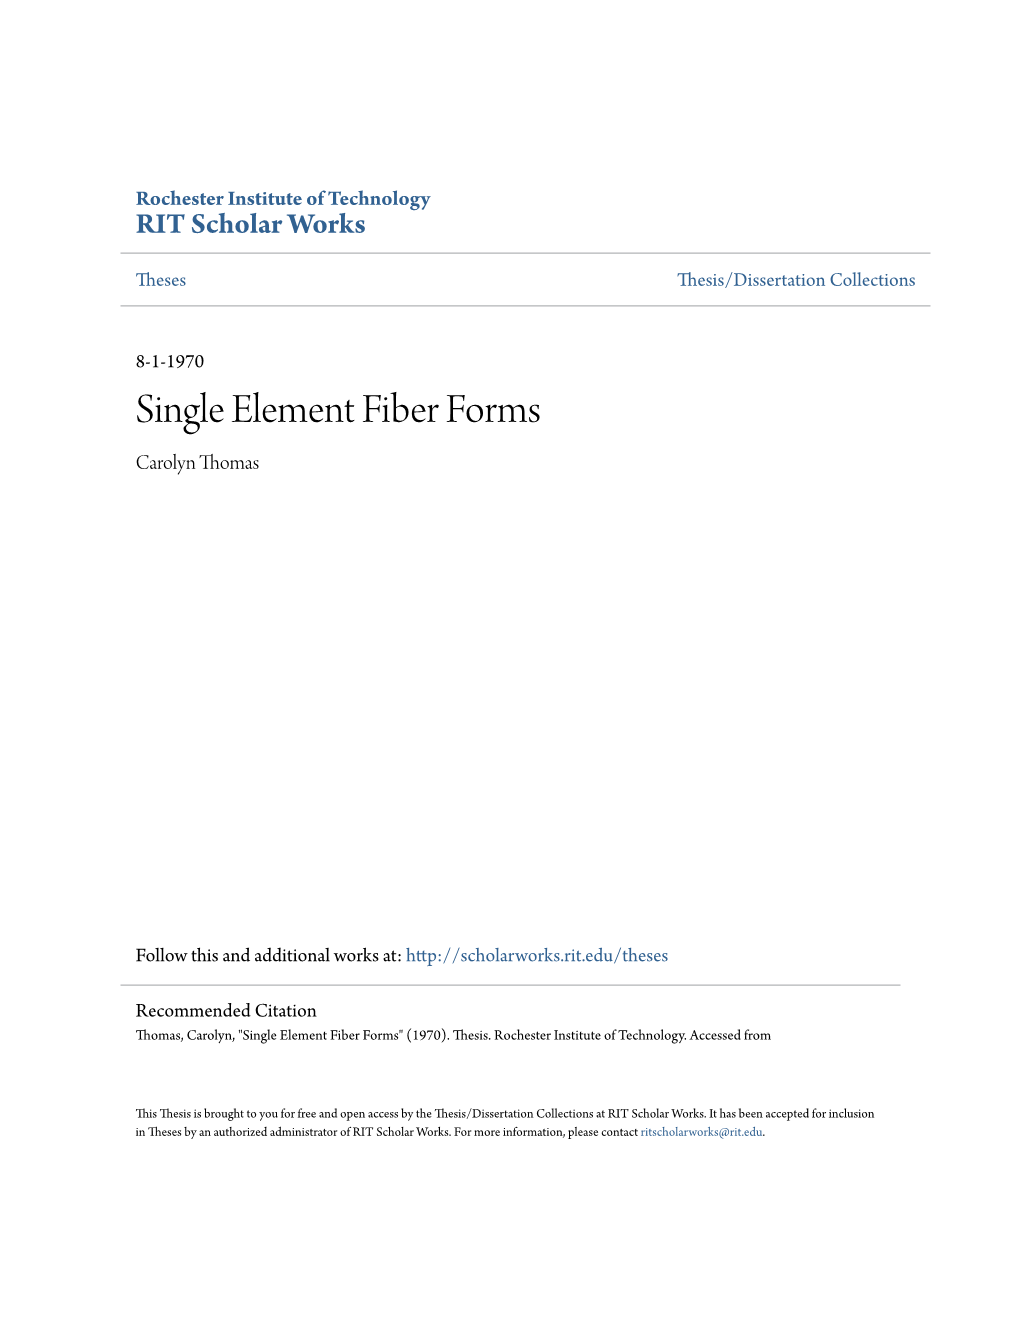 Single Element Fiber Forms Carolyn Thomas